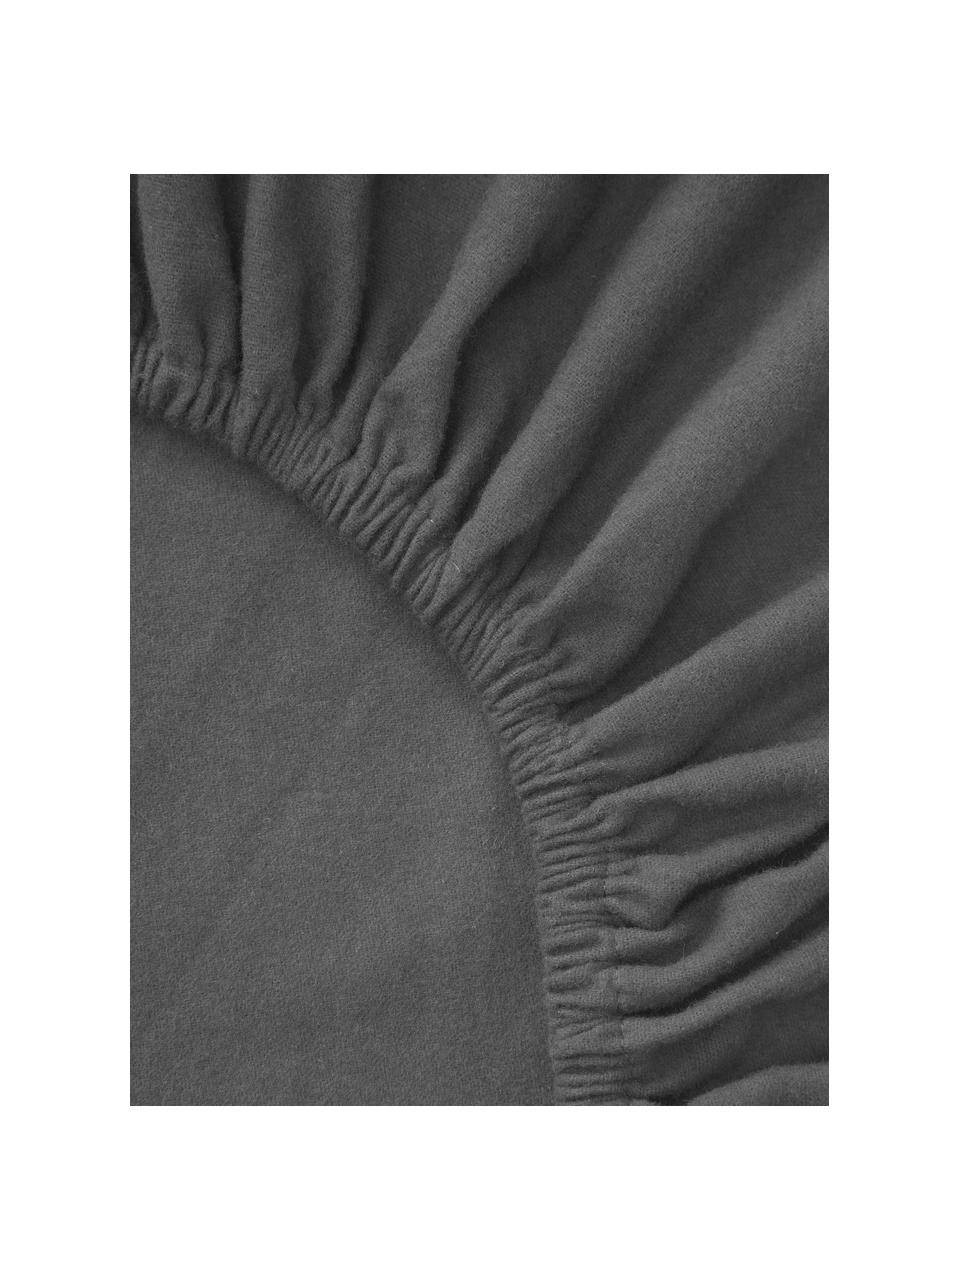 Sábana bajera cubrecolchón de franela Biba, Gris antracita, Cama 200 cm (200 x 200 x 15 cm)